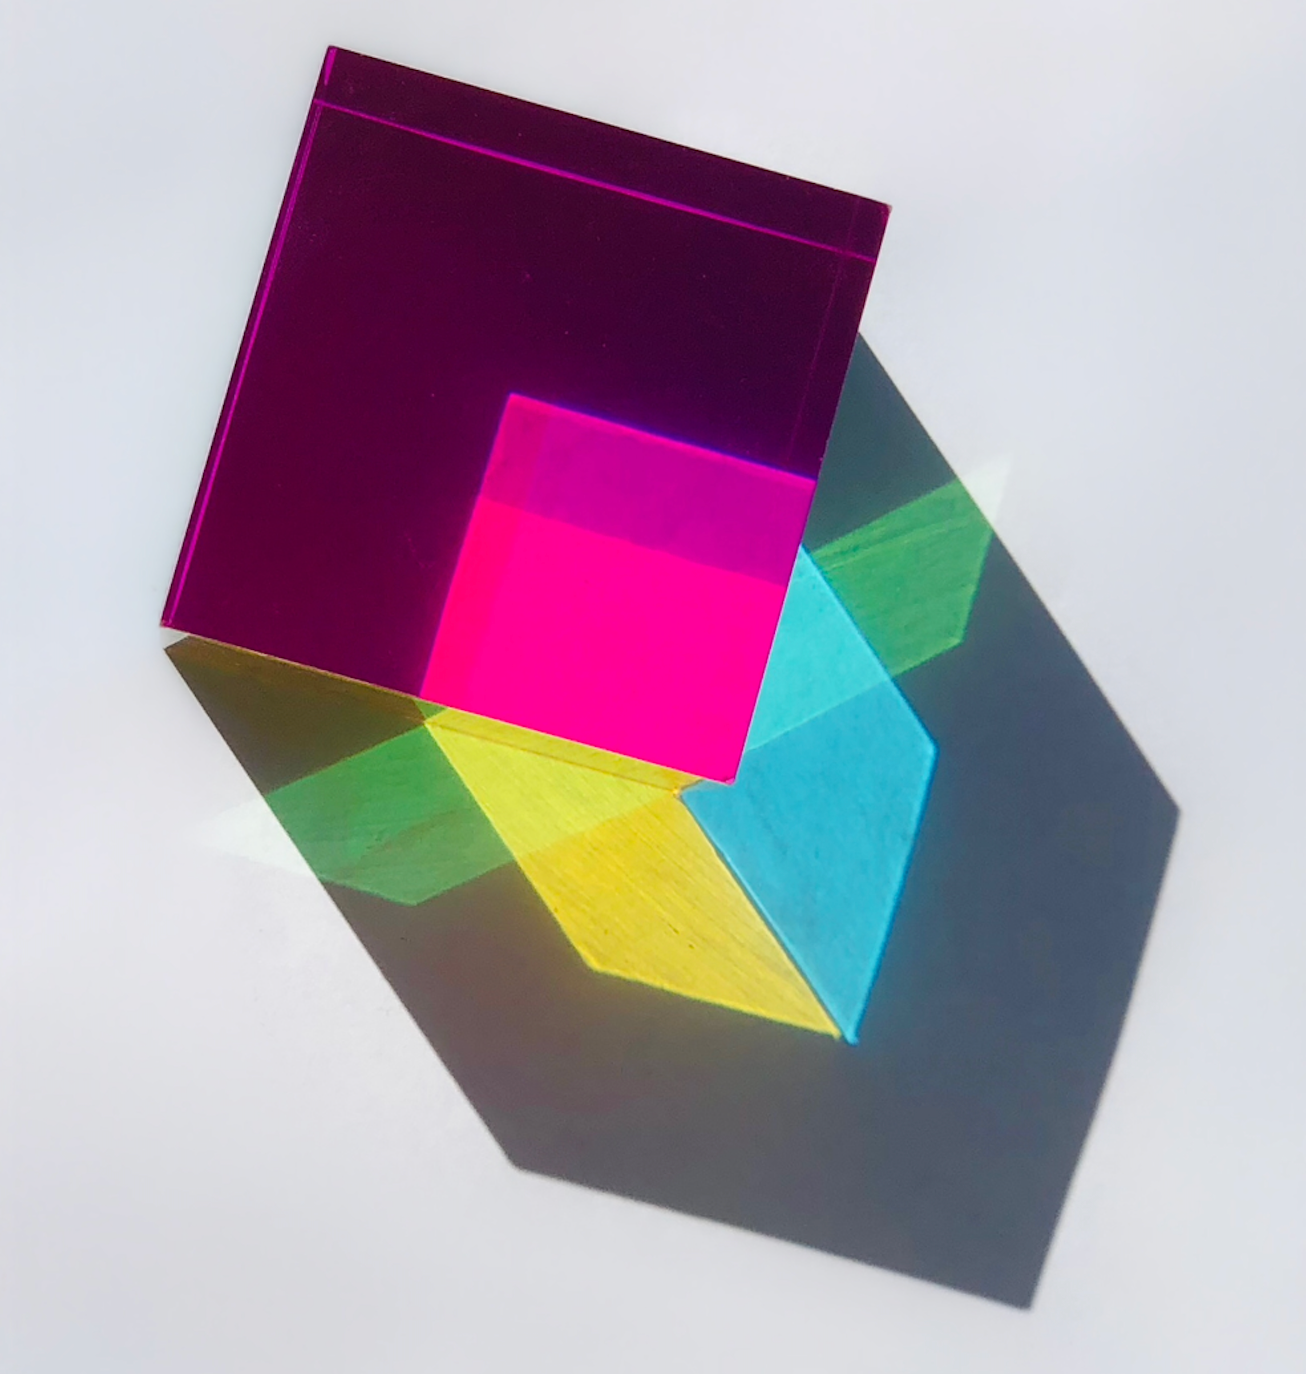 CMY Cube: The Original Cube